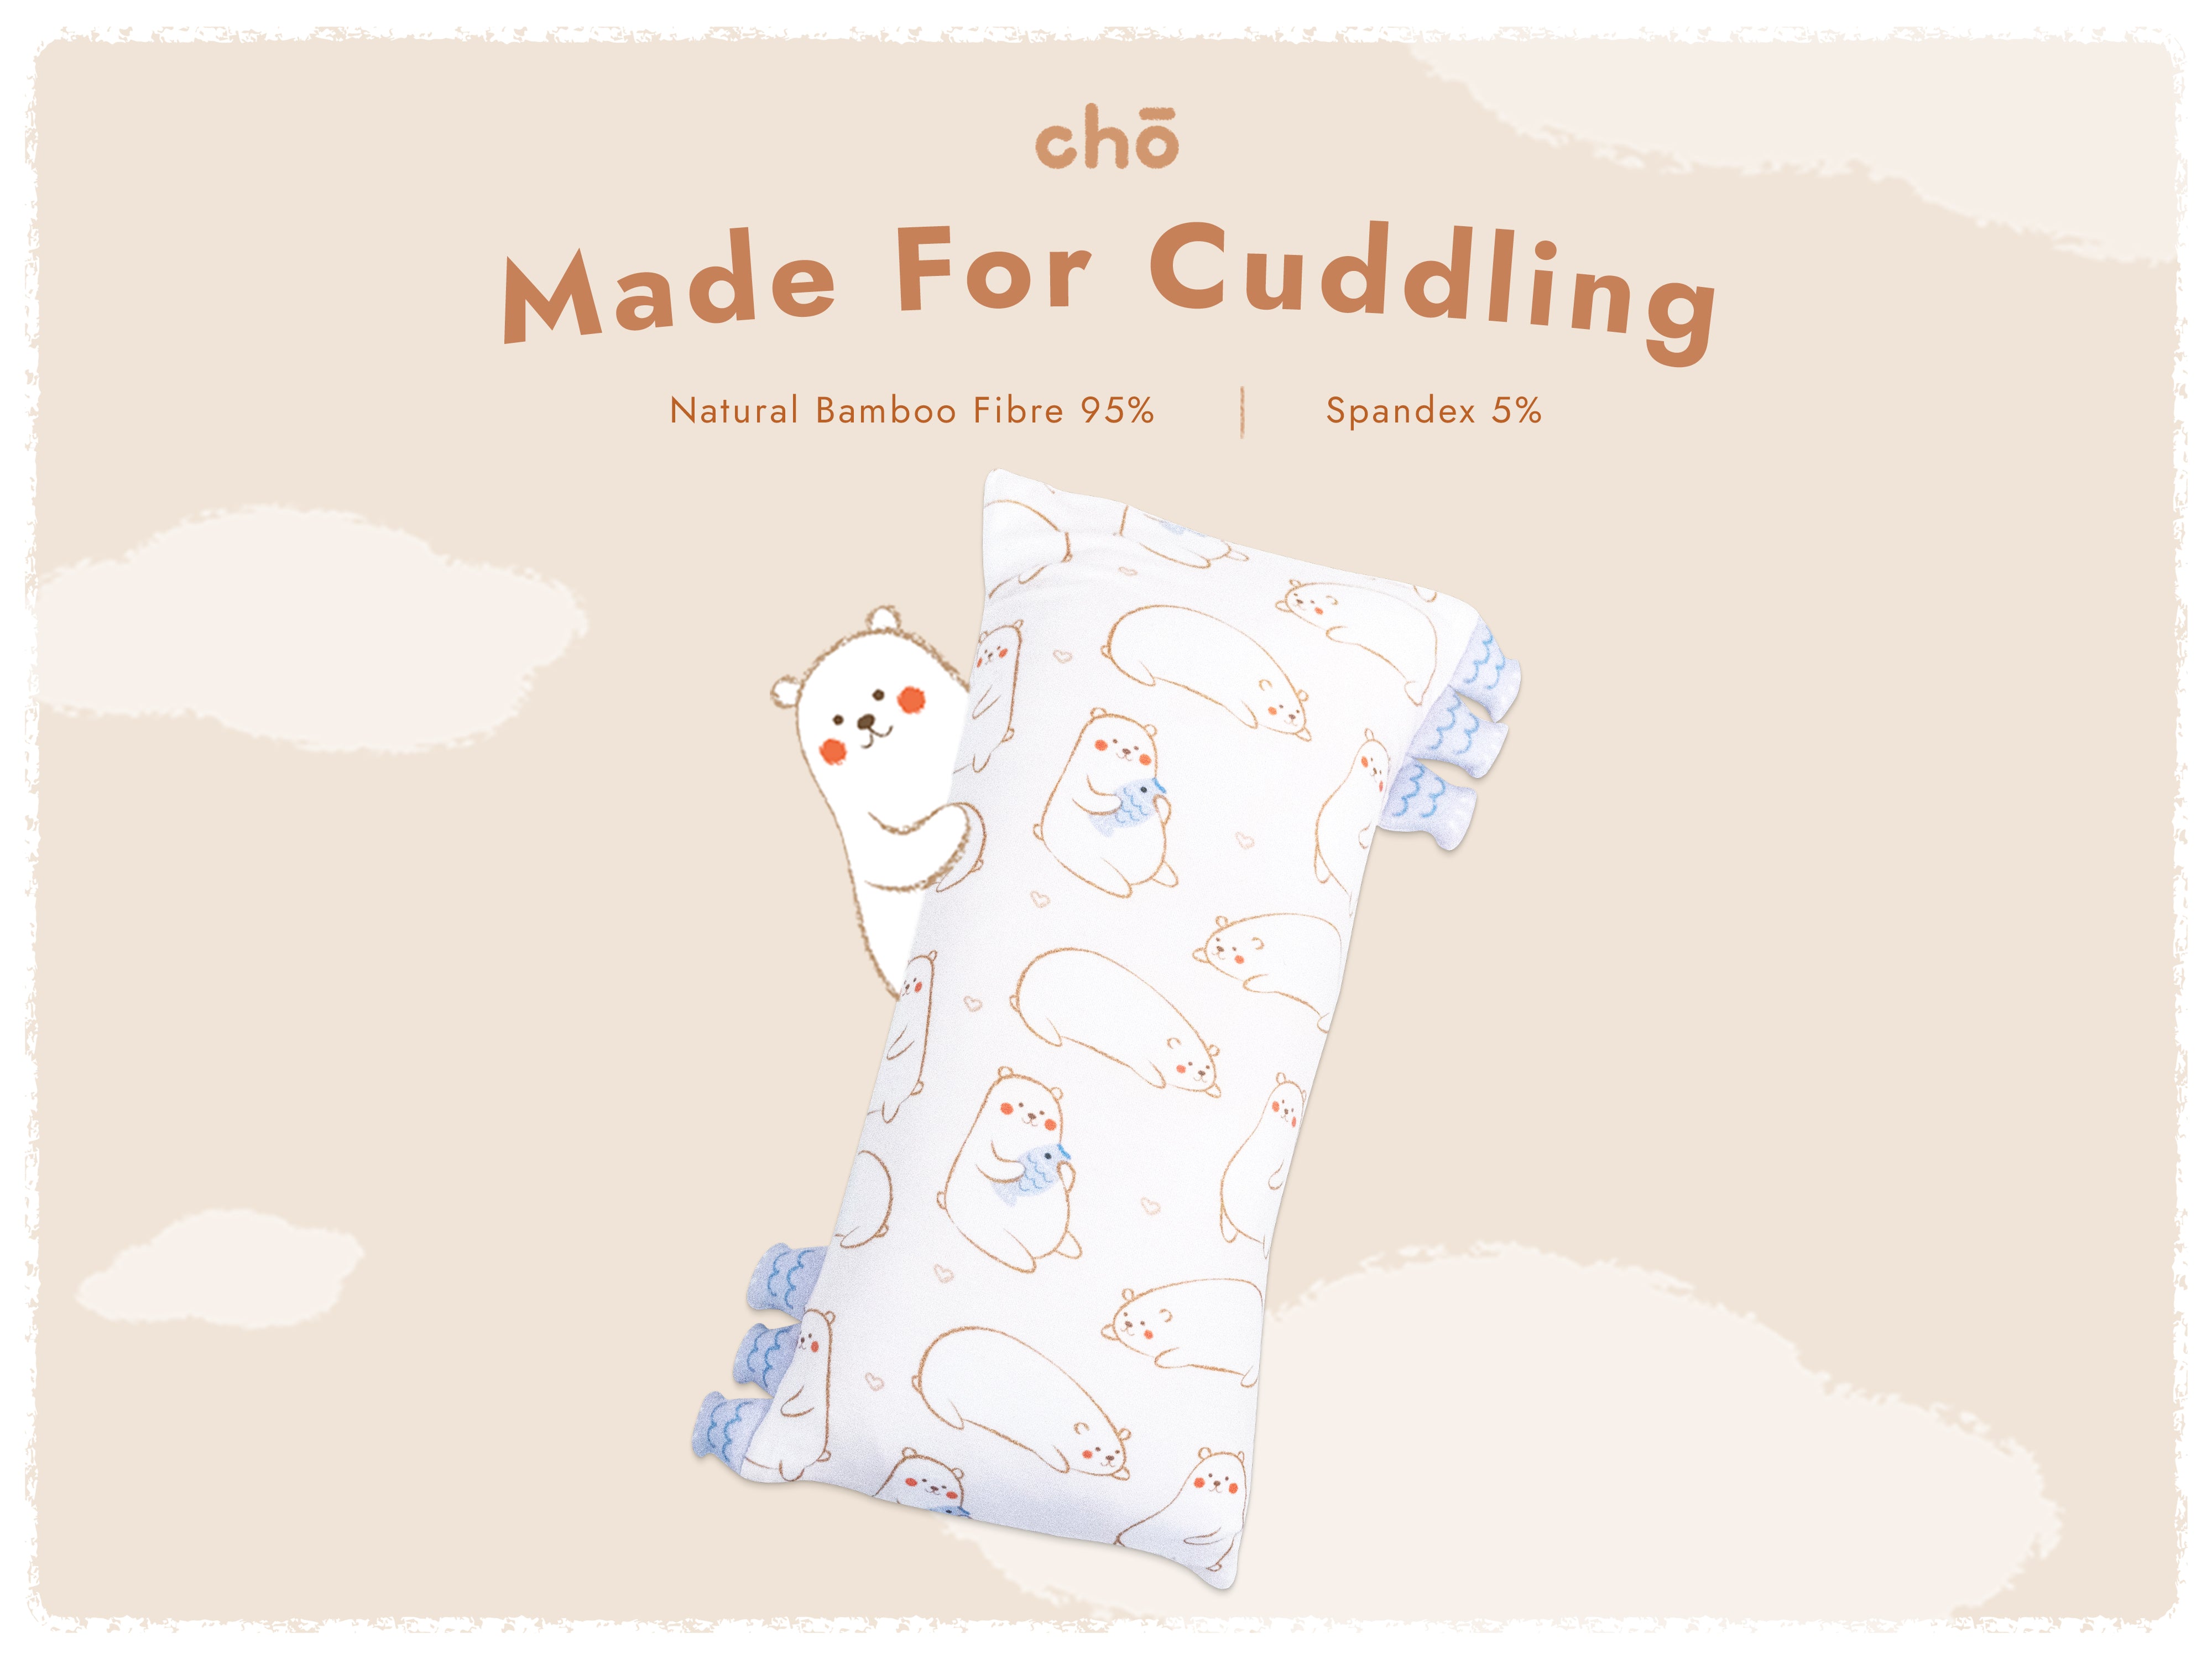 cho maru bear pillow made for cuddling